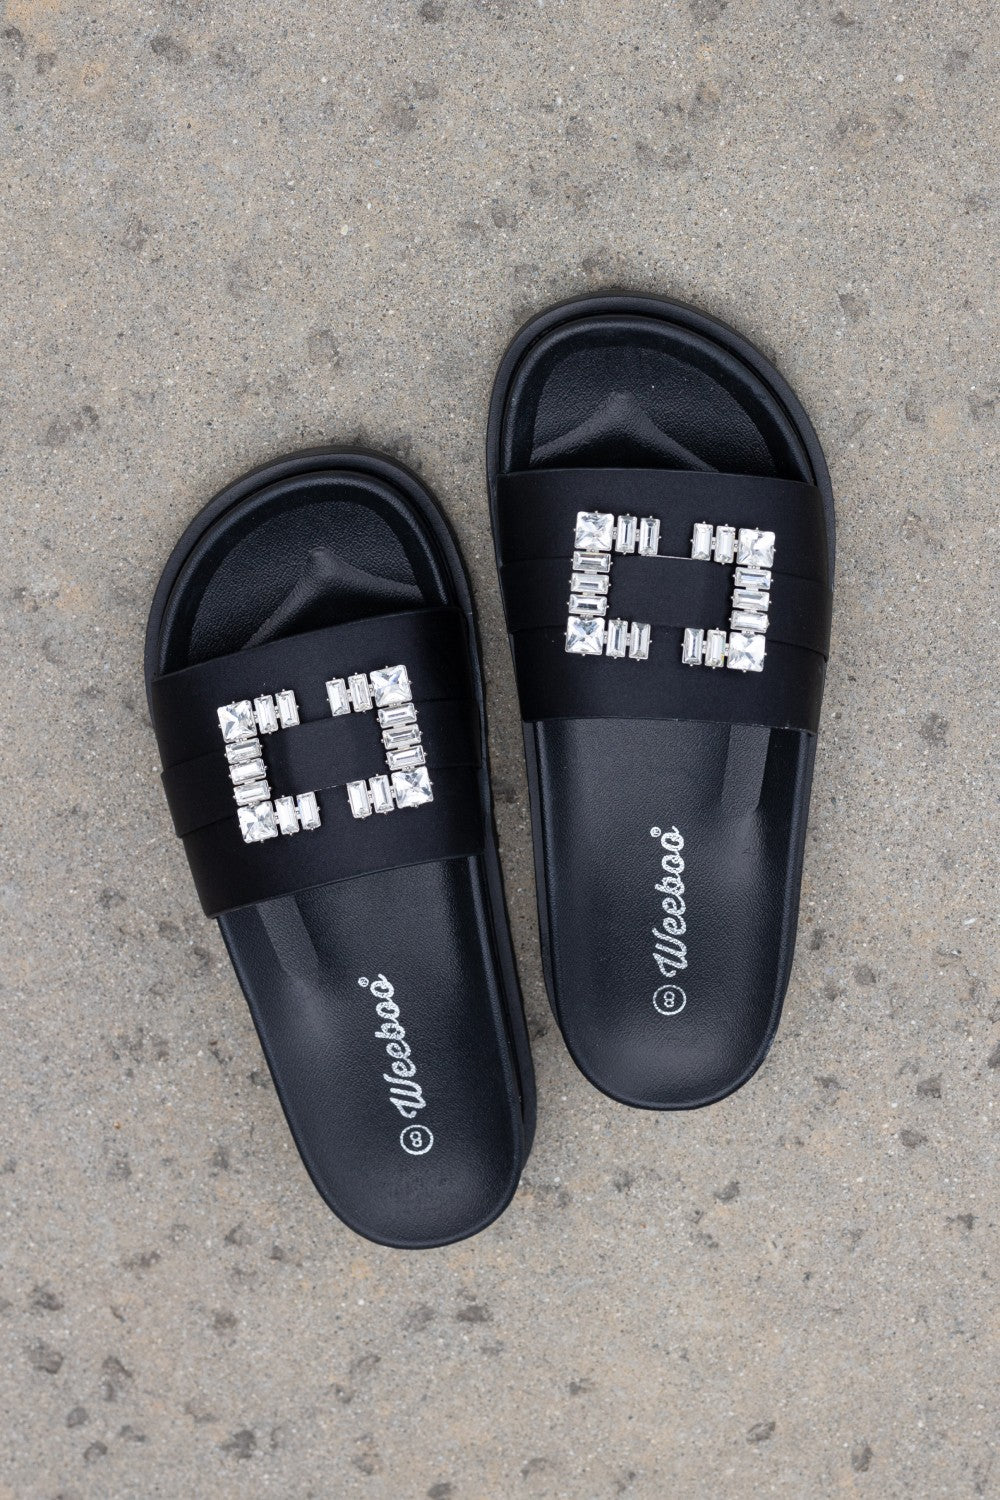 Weeboo Crystal Skies Rhinestone Buckle Slide Sandals free shipping -Oh Em Gee Boutique